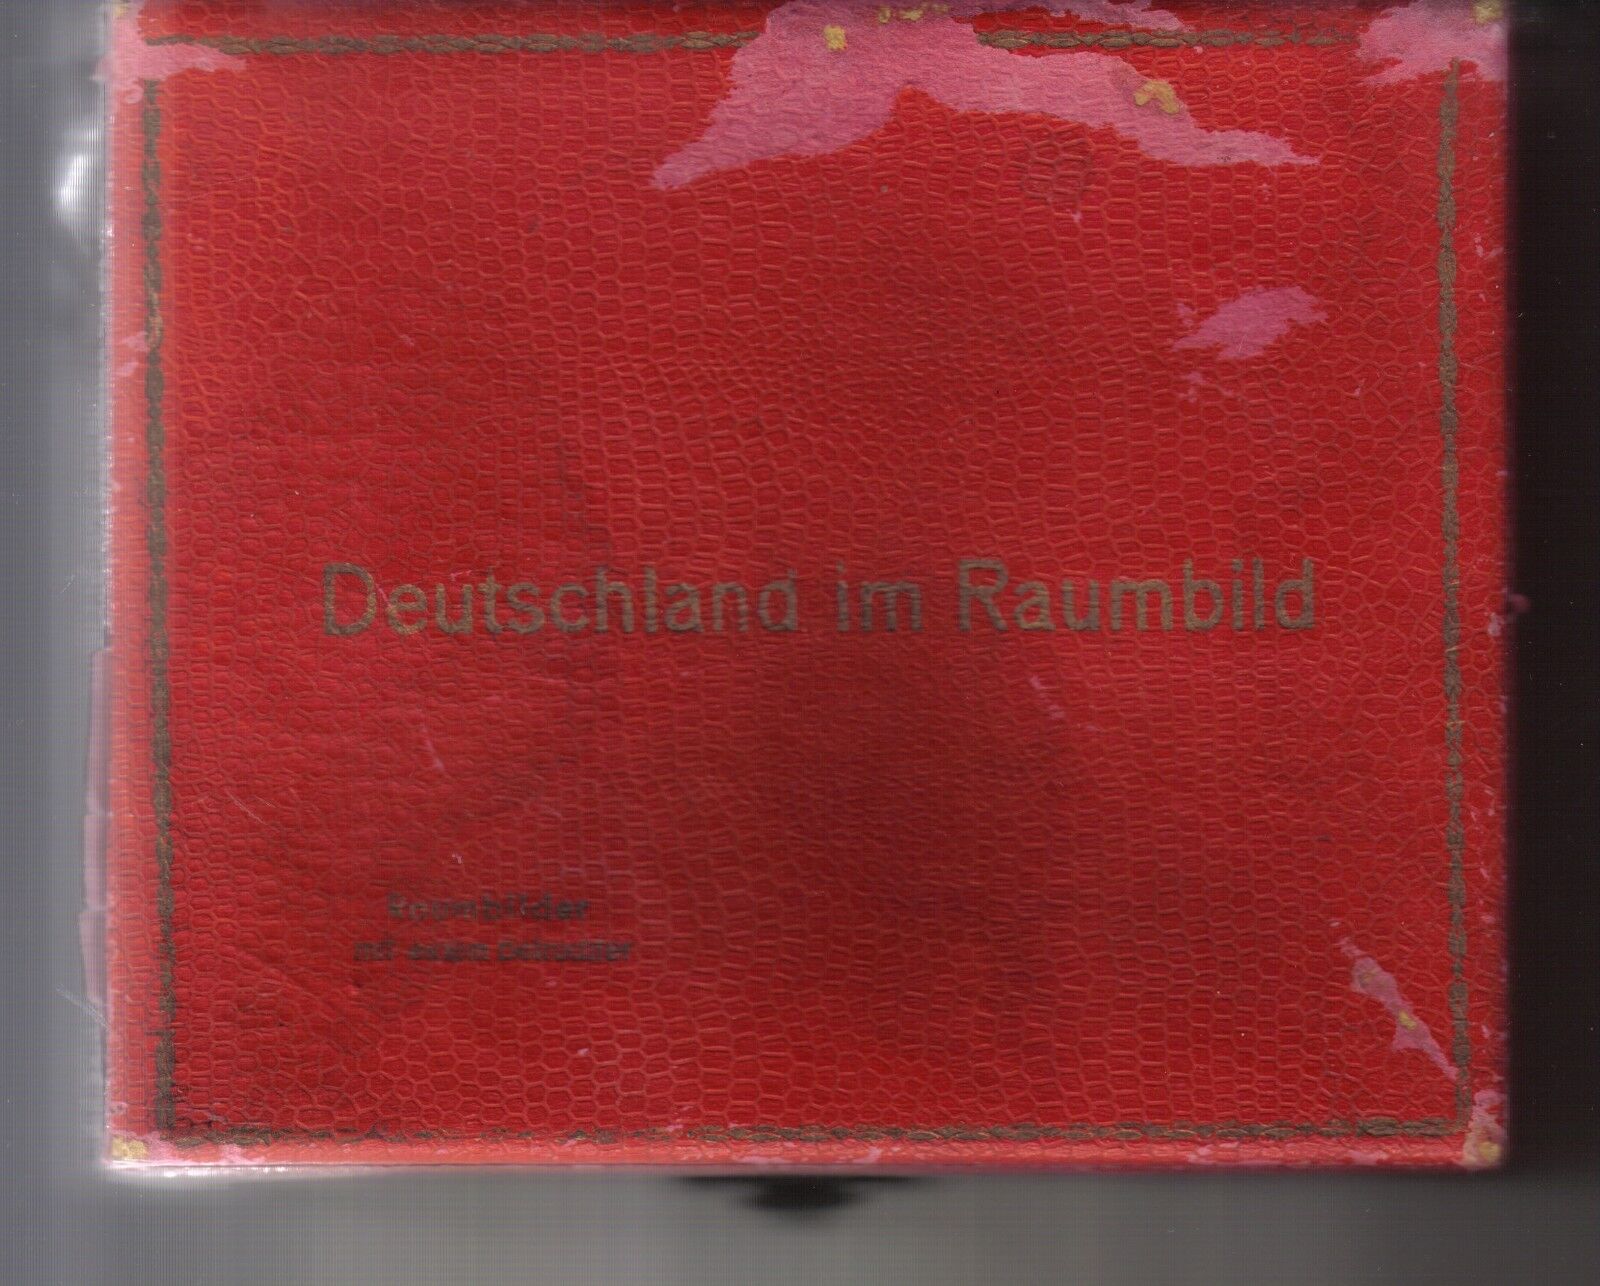 133 Raumbild Stereoviews,Case and Stereoscope- 5 Subjects